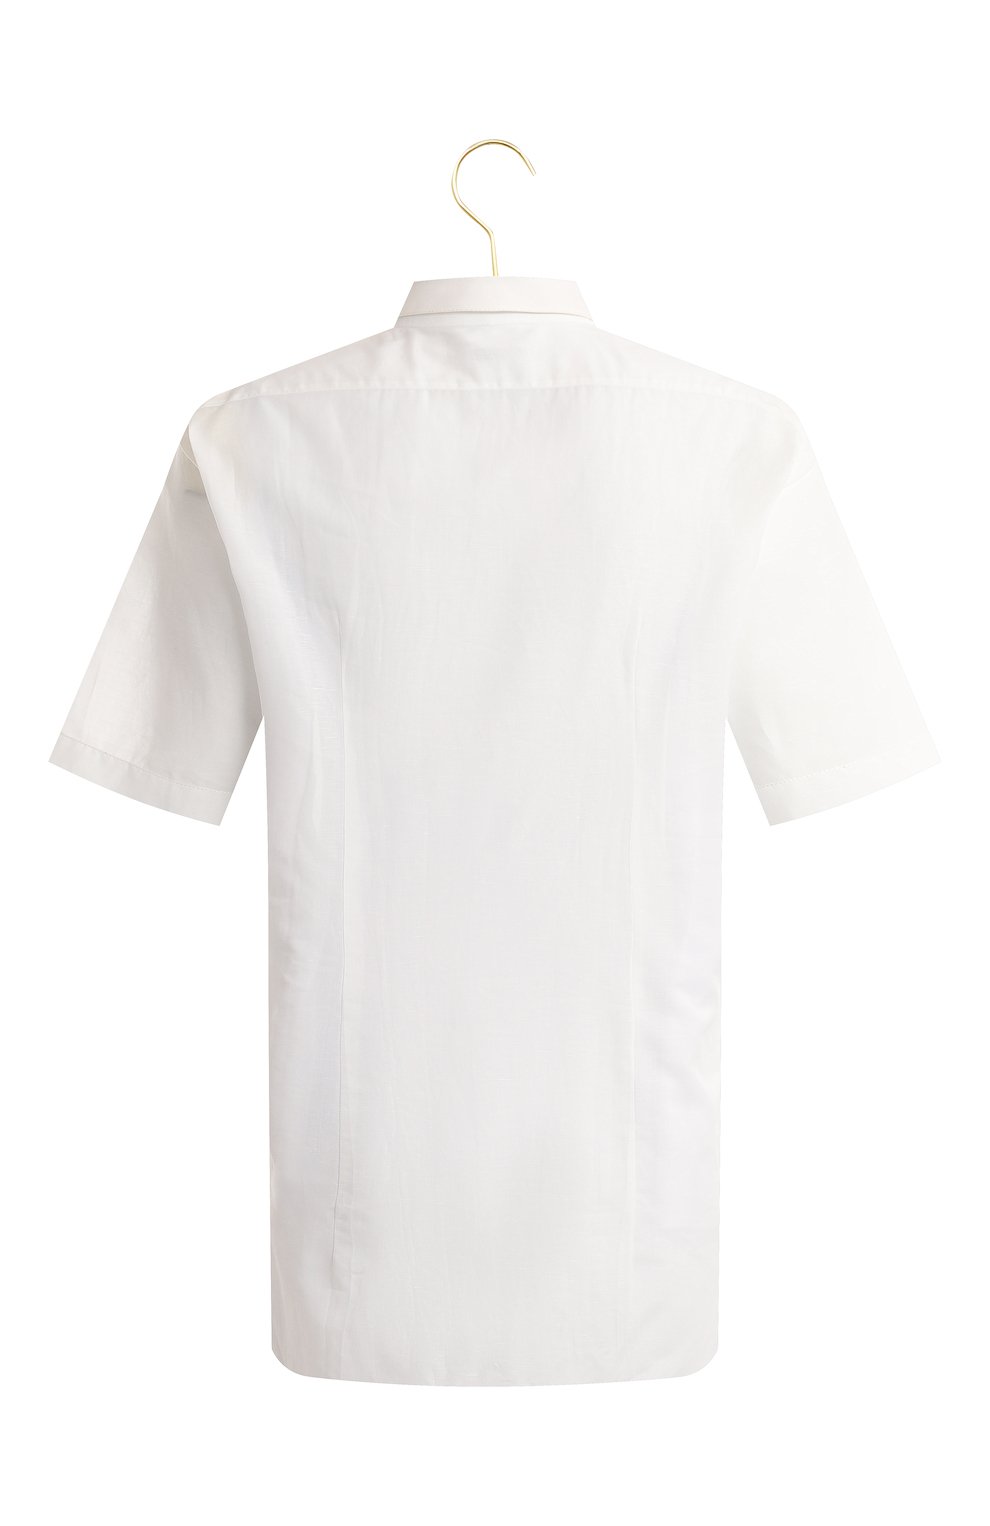 Рубашка из хлопка и льна | Zilli | Белый - 2